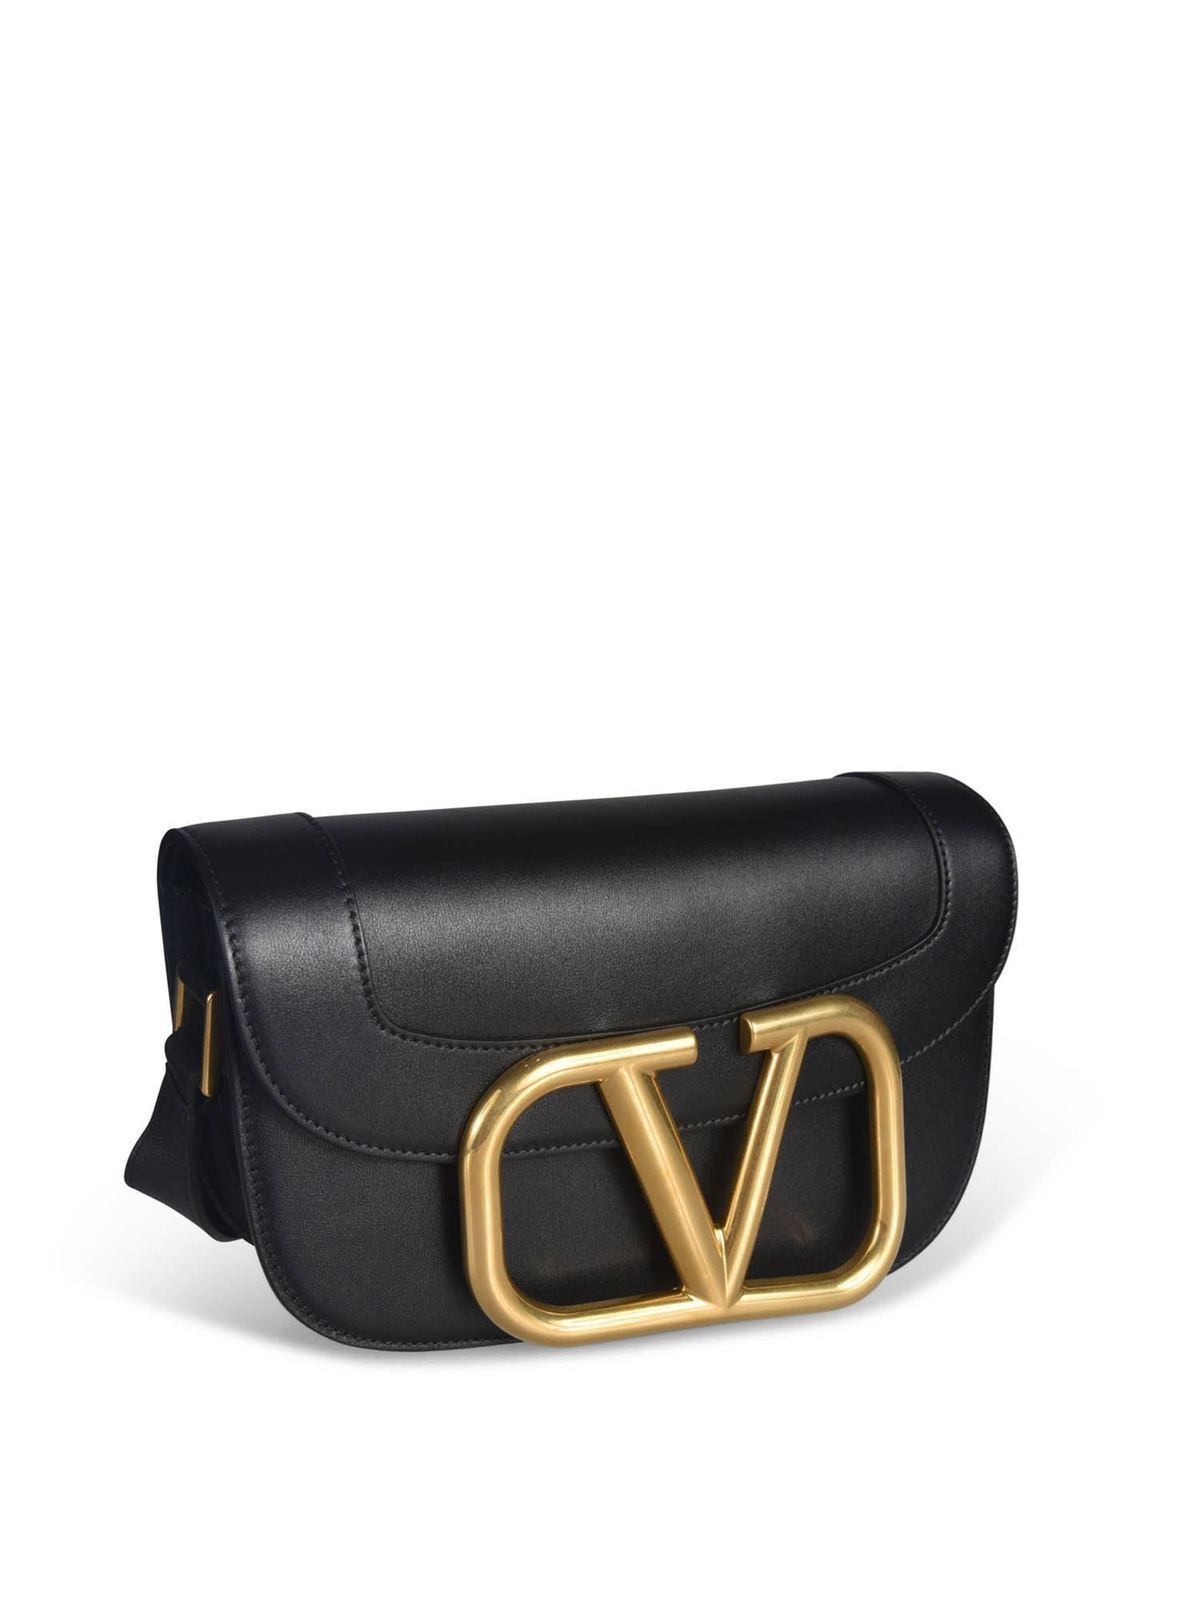 Valentino Garavani Small Supervee Shoulder Bag in Antique Brass